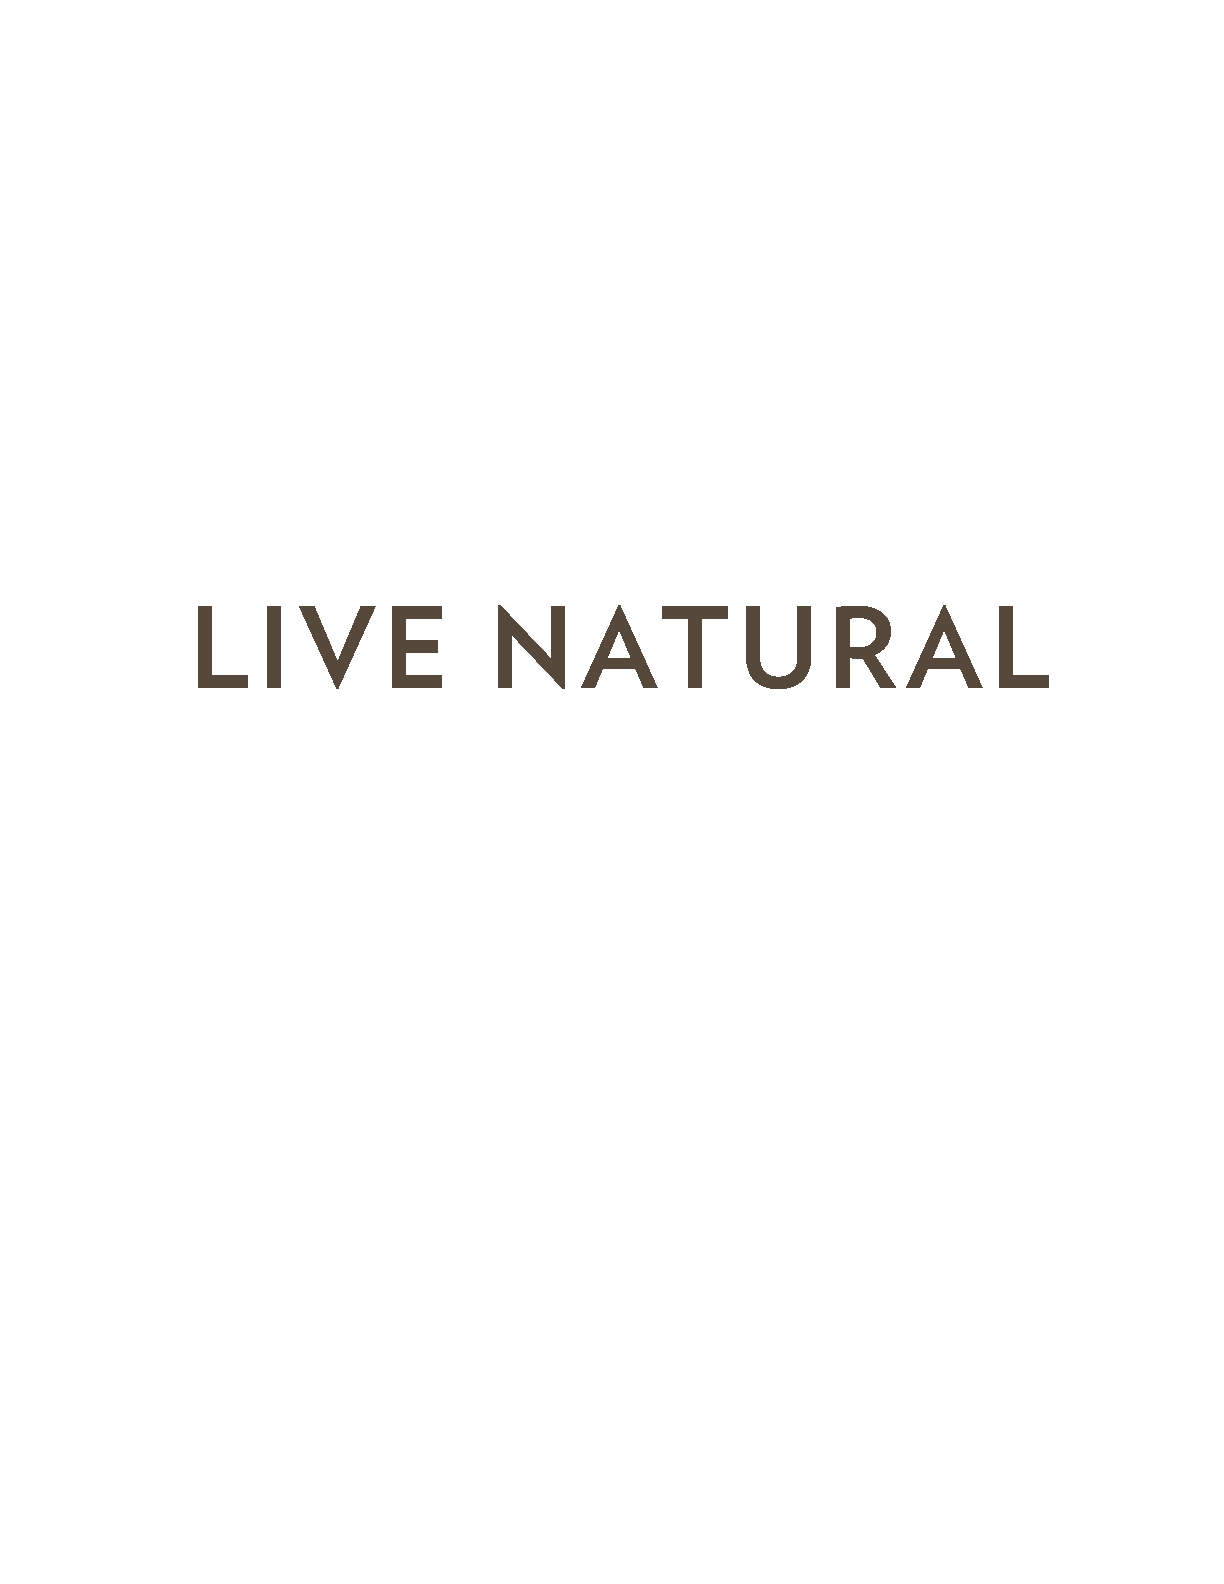 Live Natural